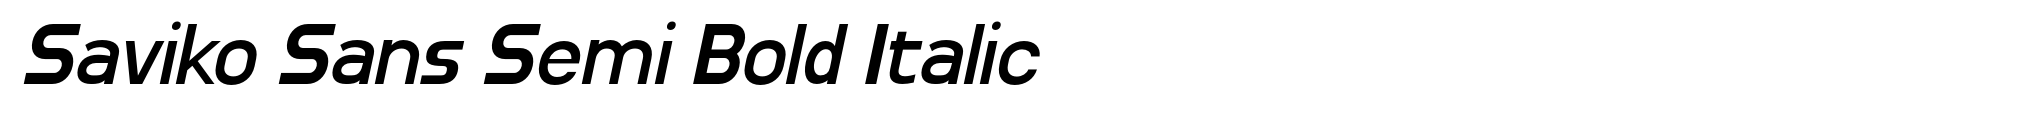 Saviko Sans Semi Bold Italic image